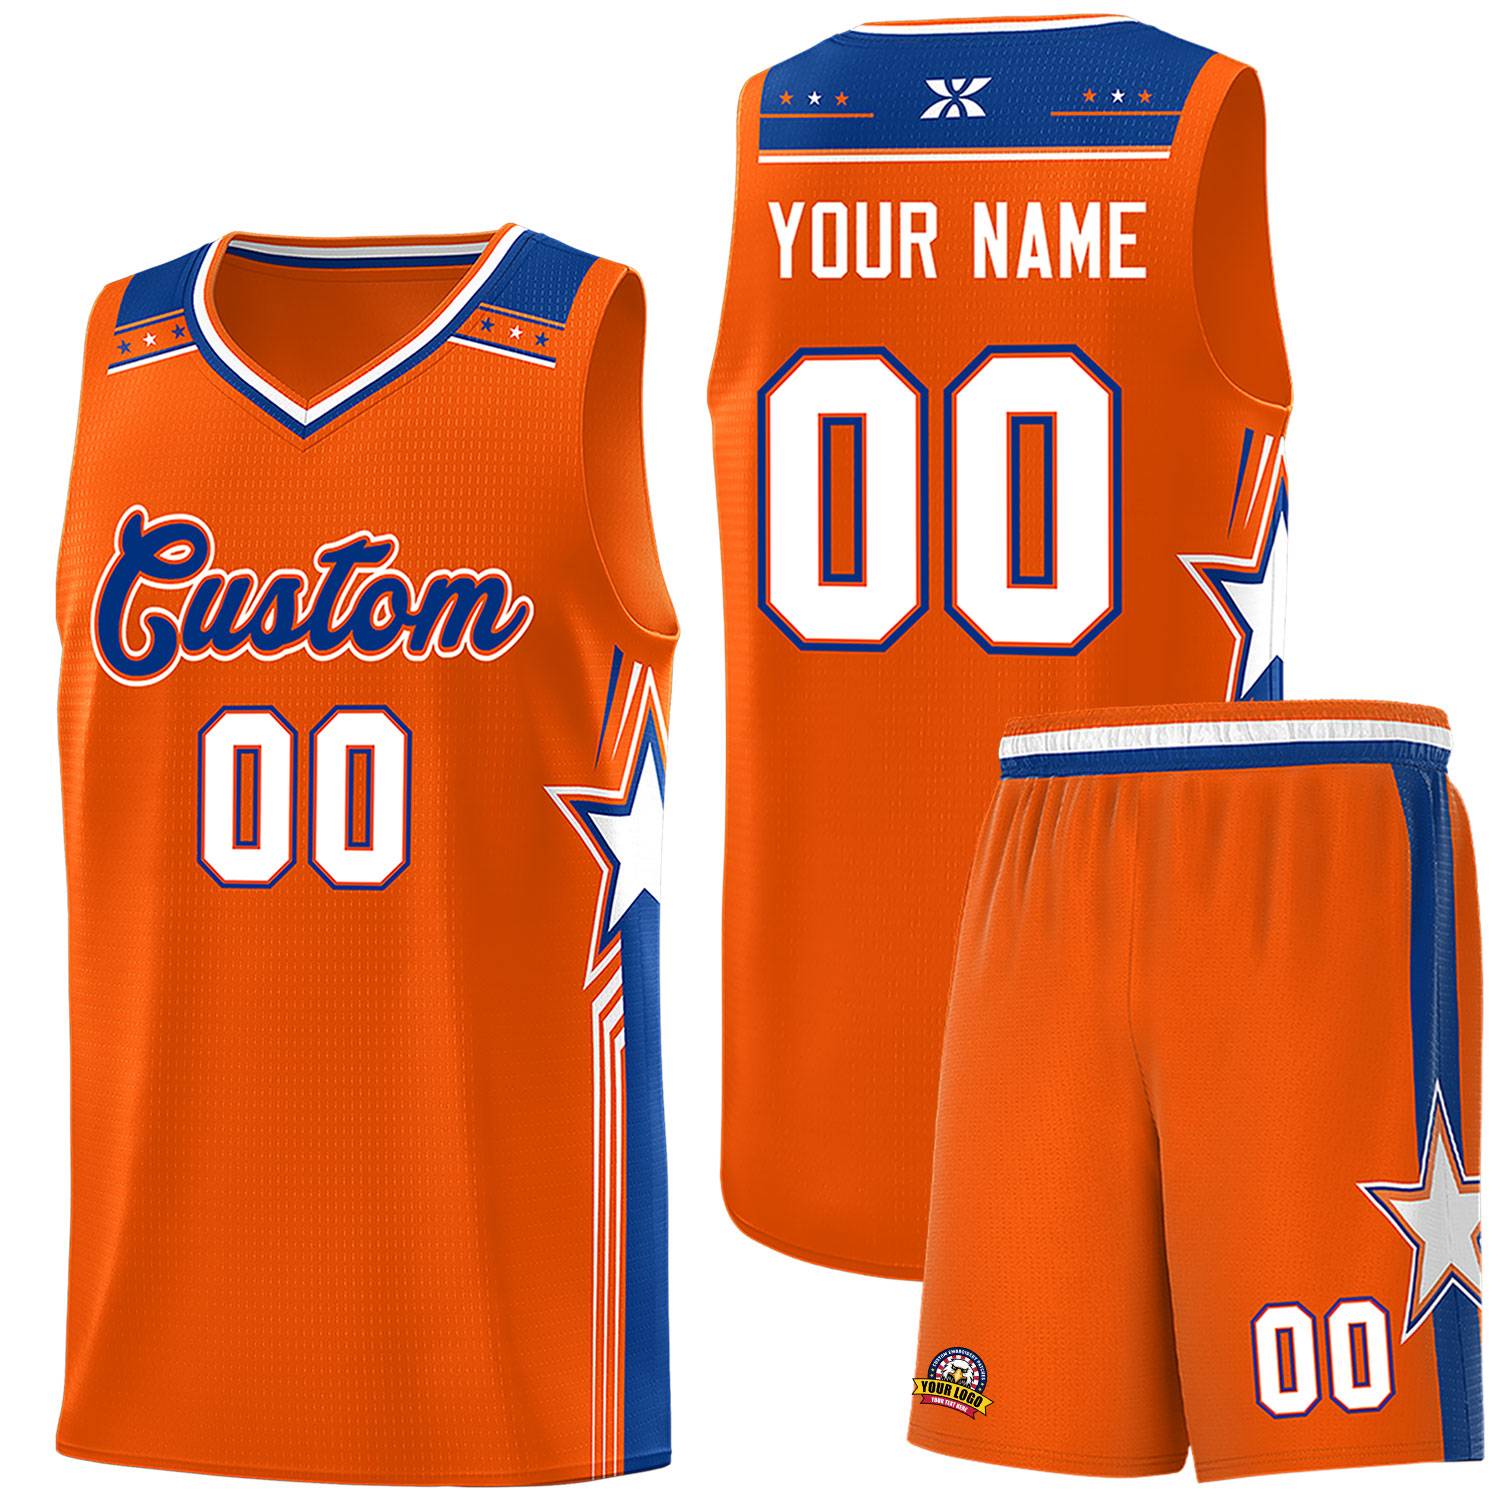 Custom Orange Aqua Star Graffiti Pattern Sports Uniform Basketball Jersey